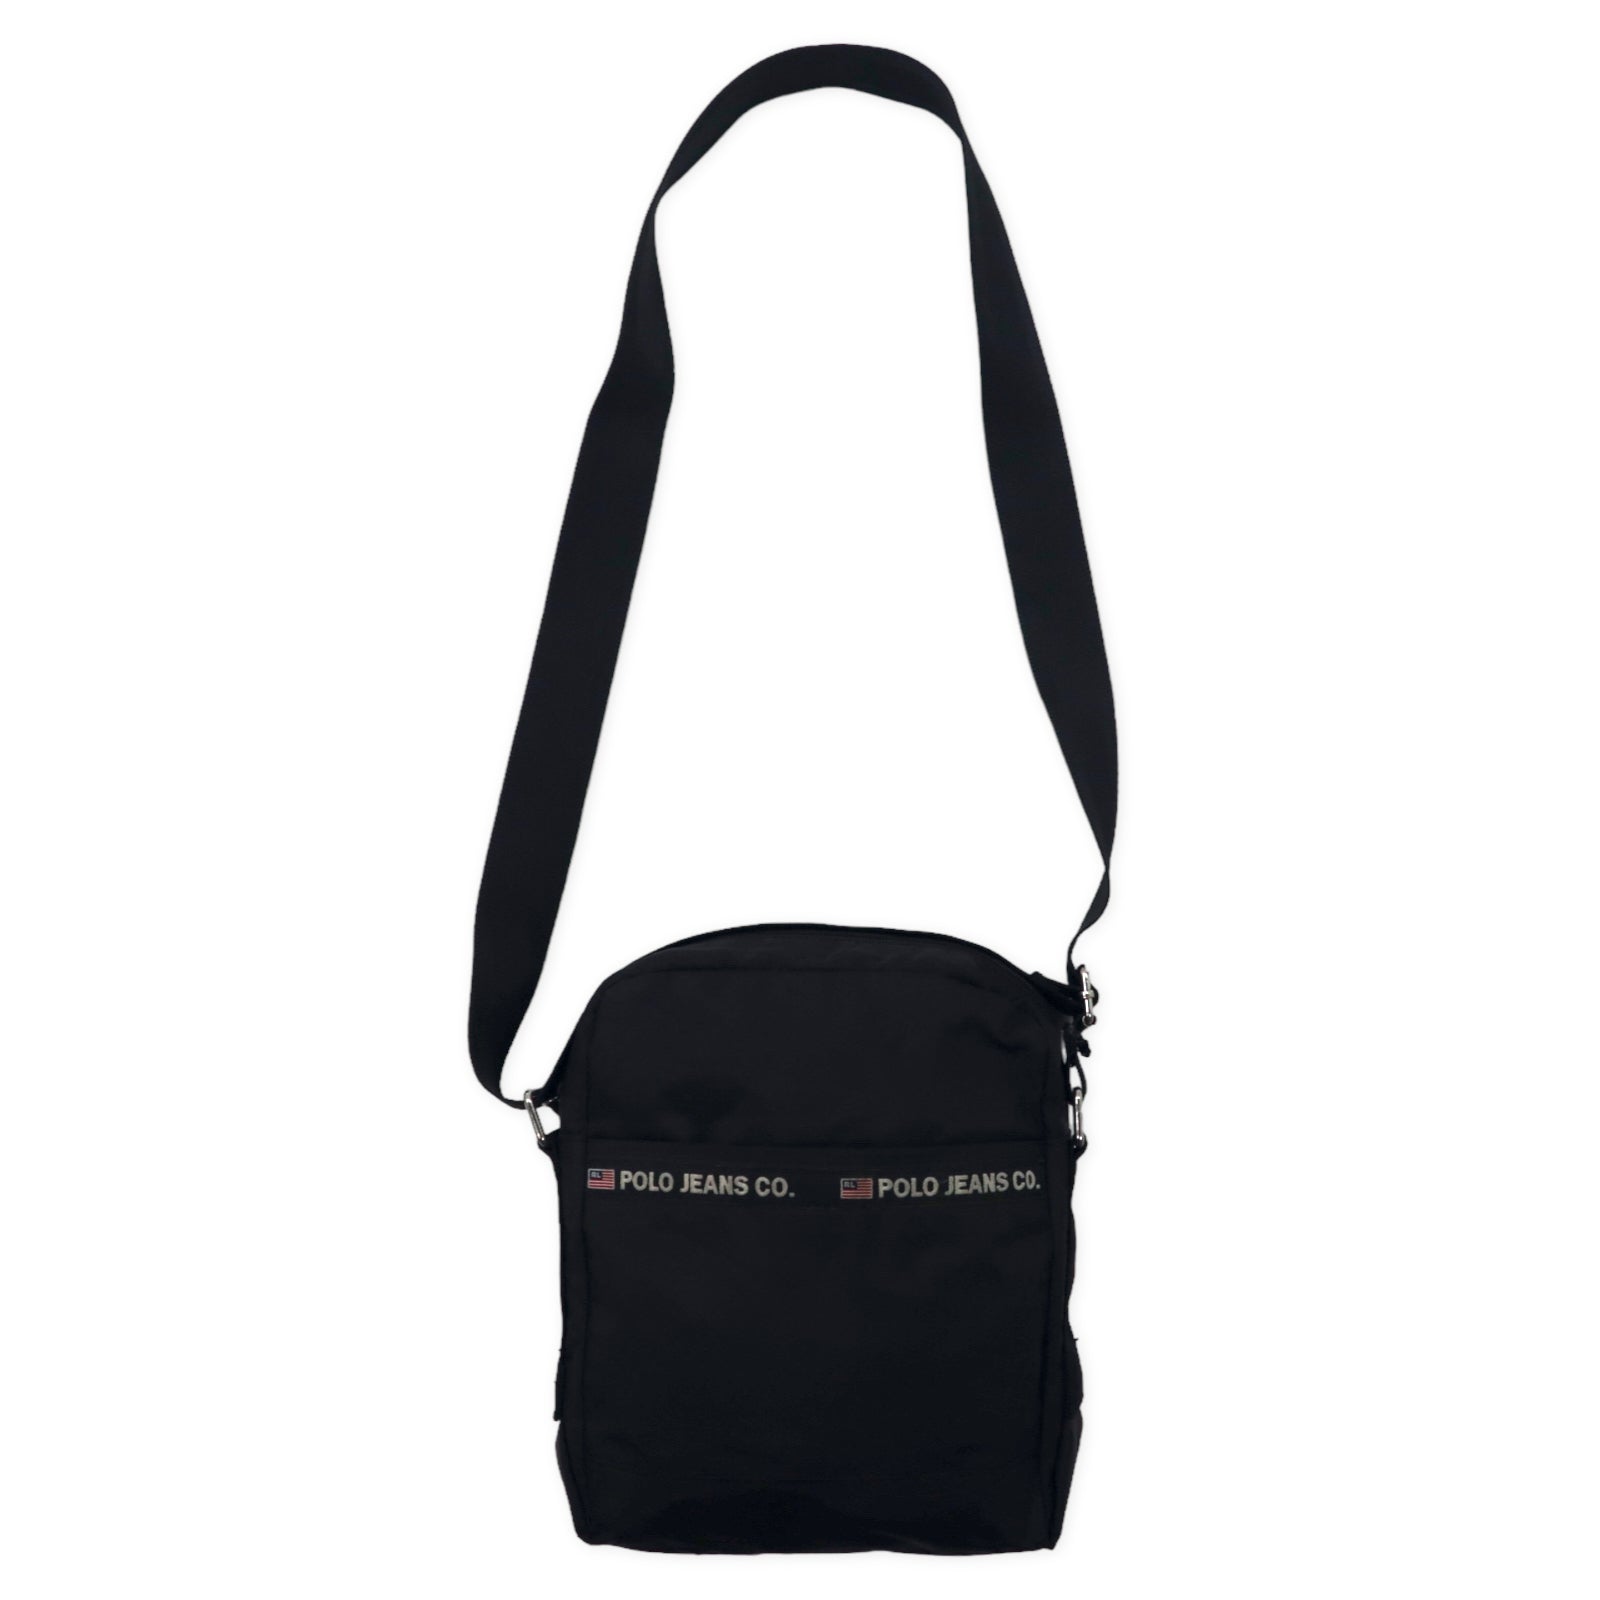 POLO JEANS CO. Ralph Lauren 90's mini shoulder bag black nylon 